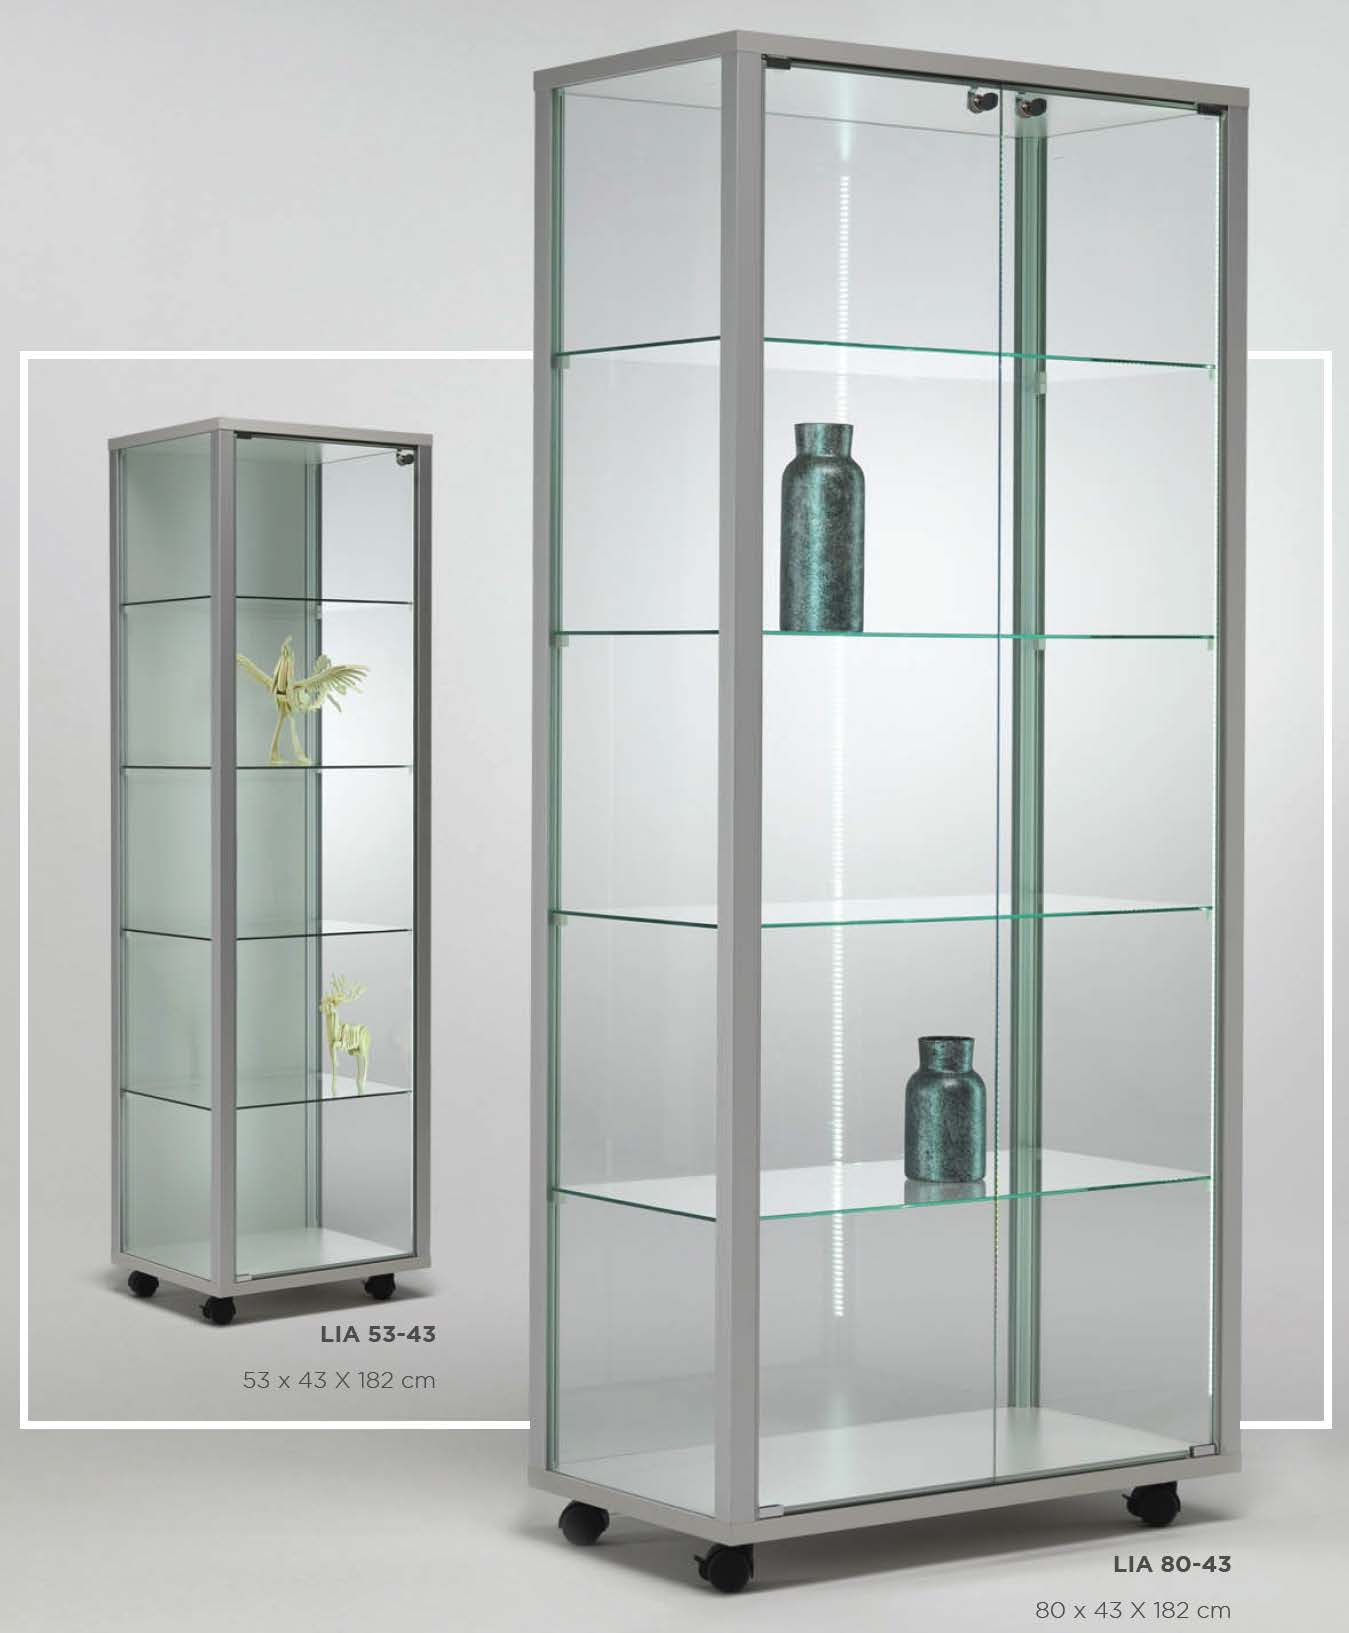 LIA 80-43 Floor Display Cabinet Aluminum Framed Glass Anti-Dust